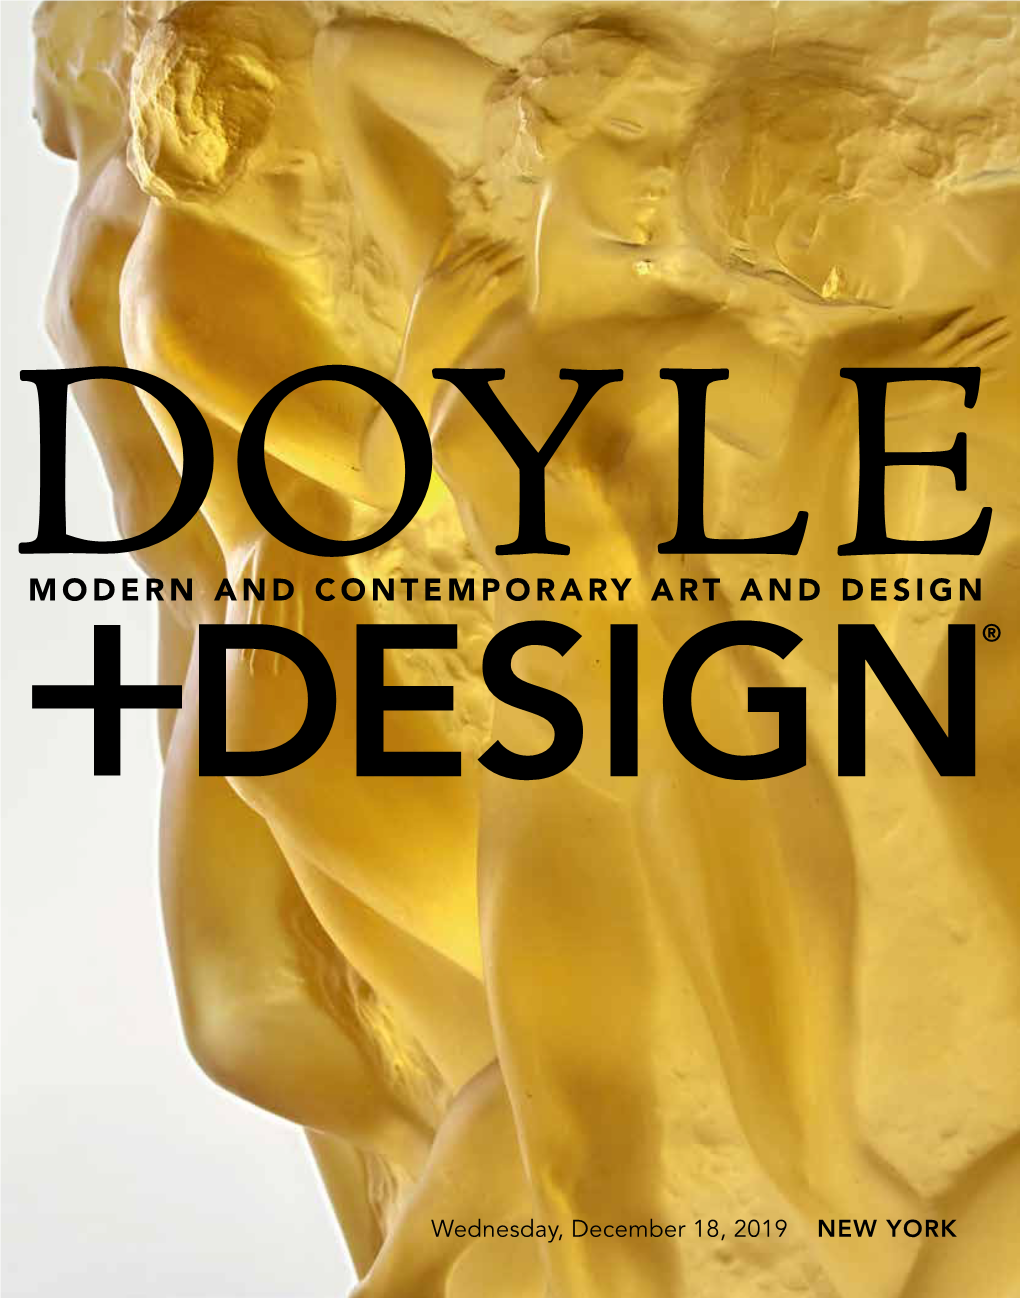 Wednesday, December 18, 2019 NEW YORK DOYLE+DESIGN® MODERN and CONTEMPORARY ART and DESIGN